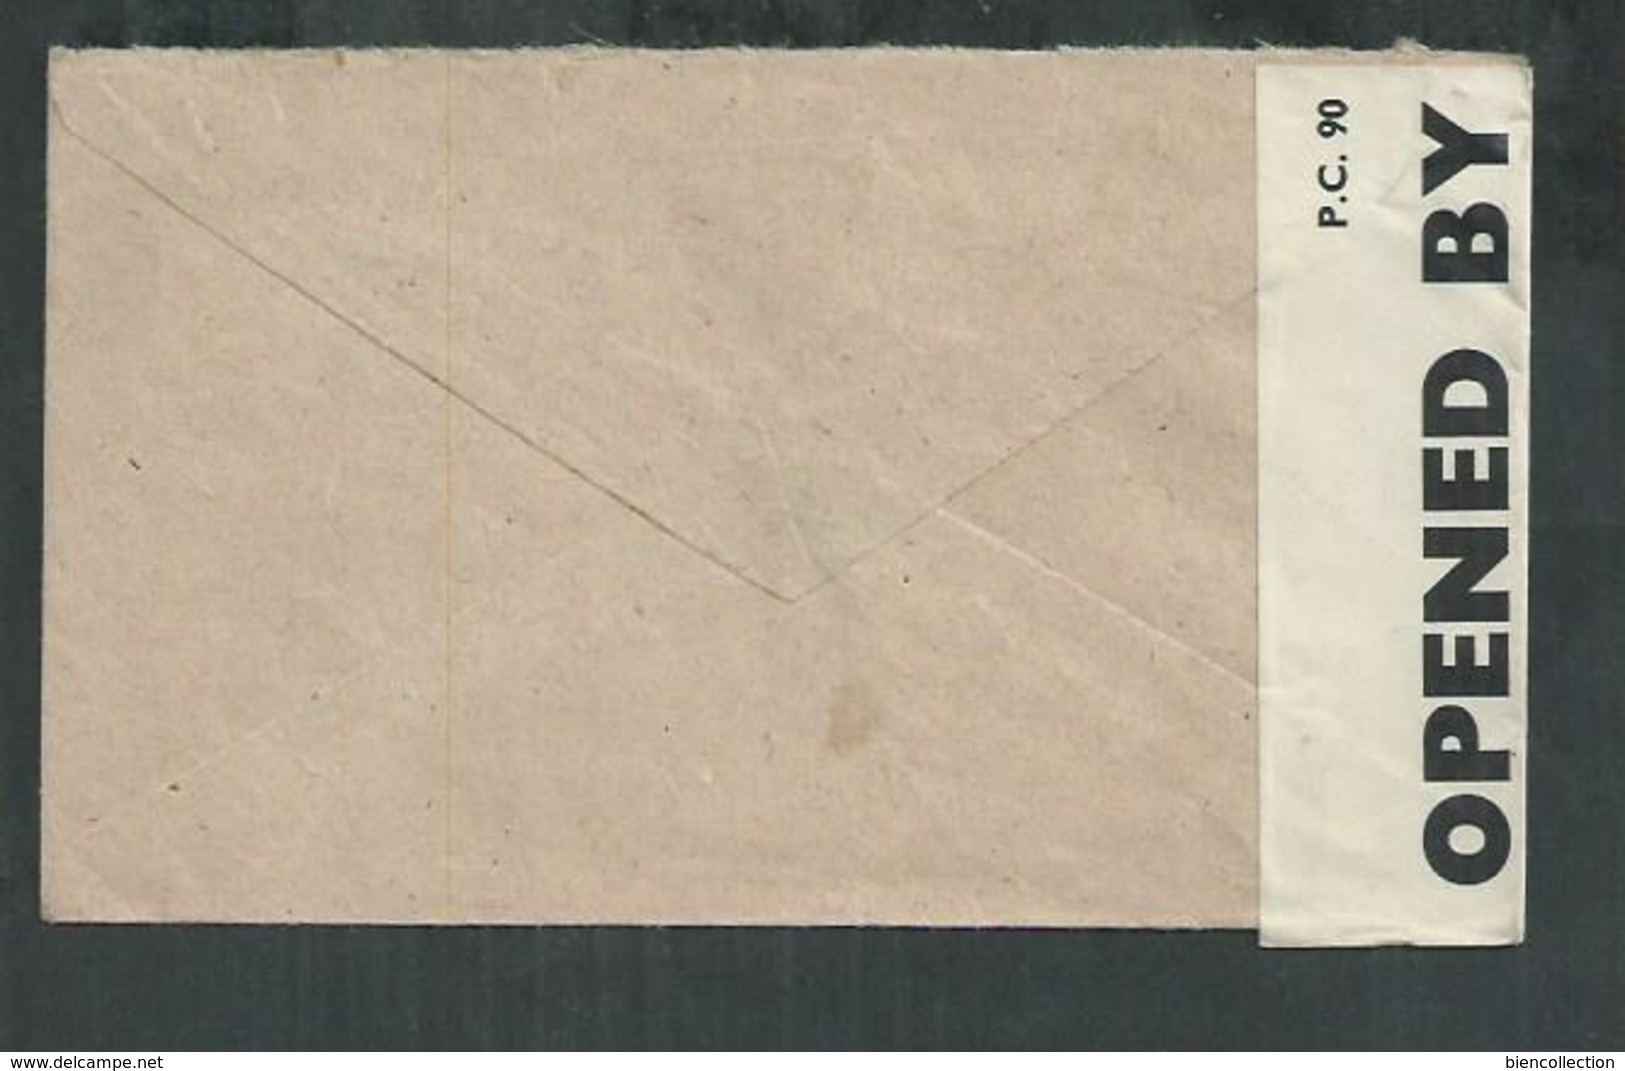 Irlande. Lettre Pour Londres Avec Censure EXAMINER 1901 From Baile Atha Cliath - Briefe U. Dokumente